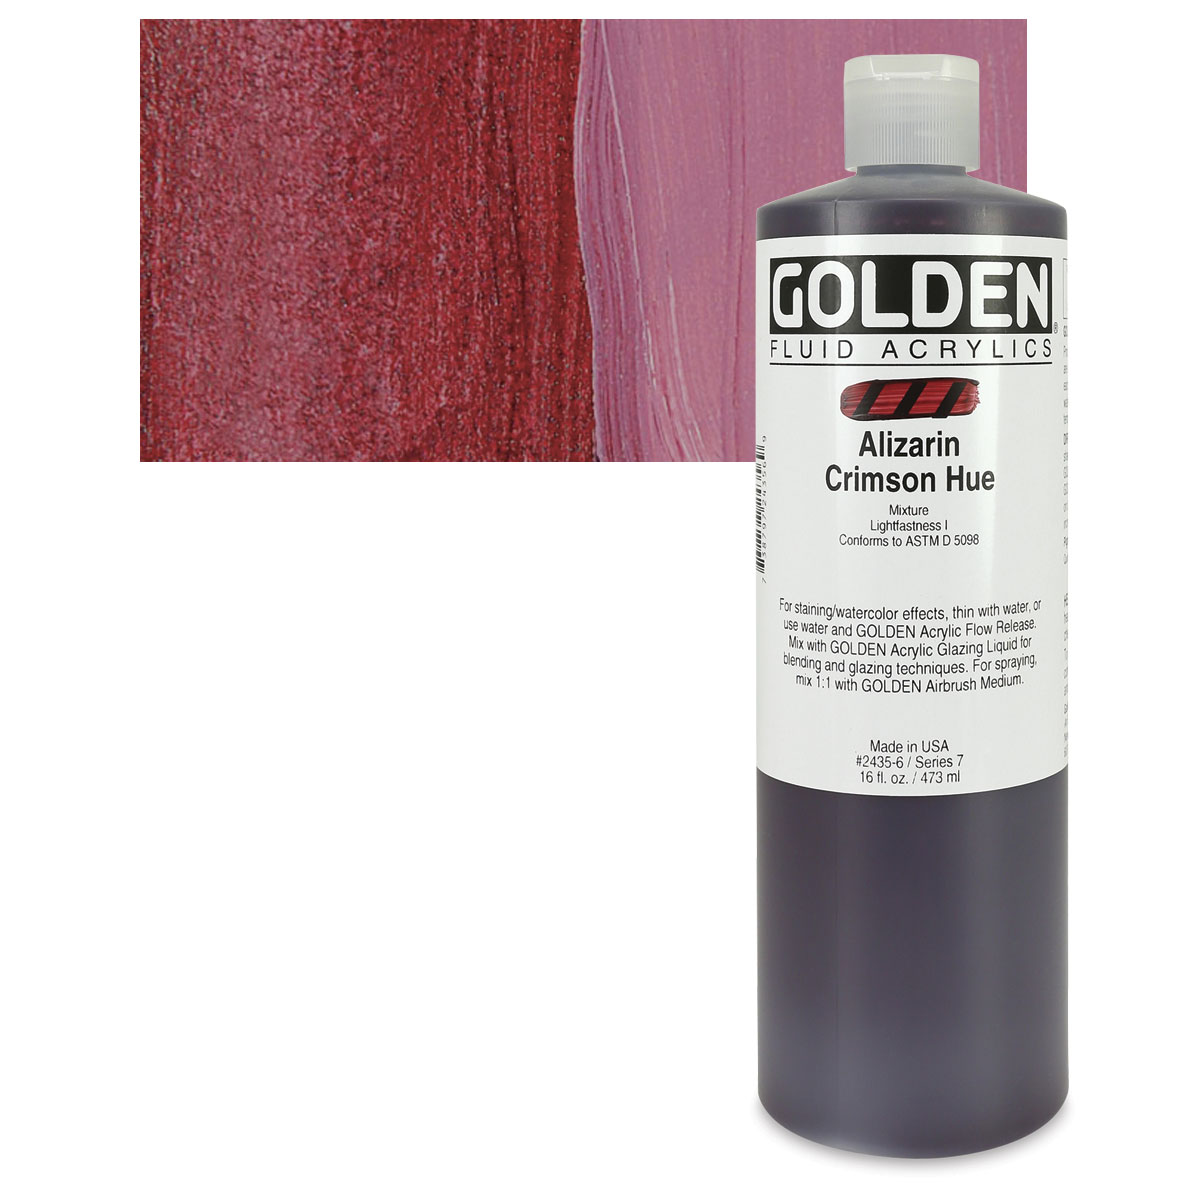 Golden Fluid Acrylics 1oz Alizarin Crimson Hue